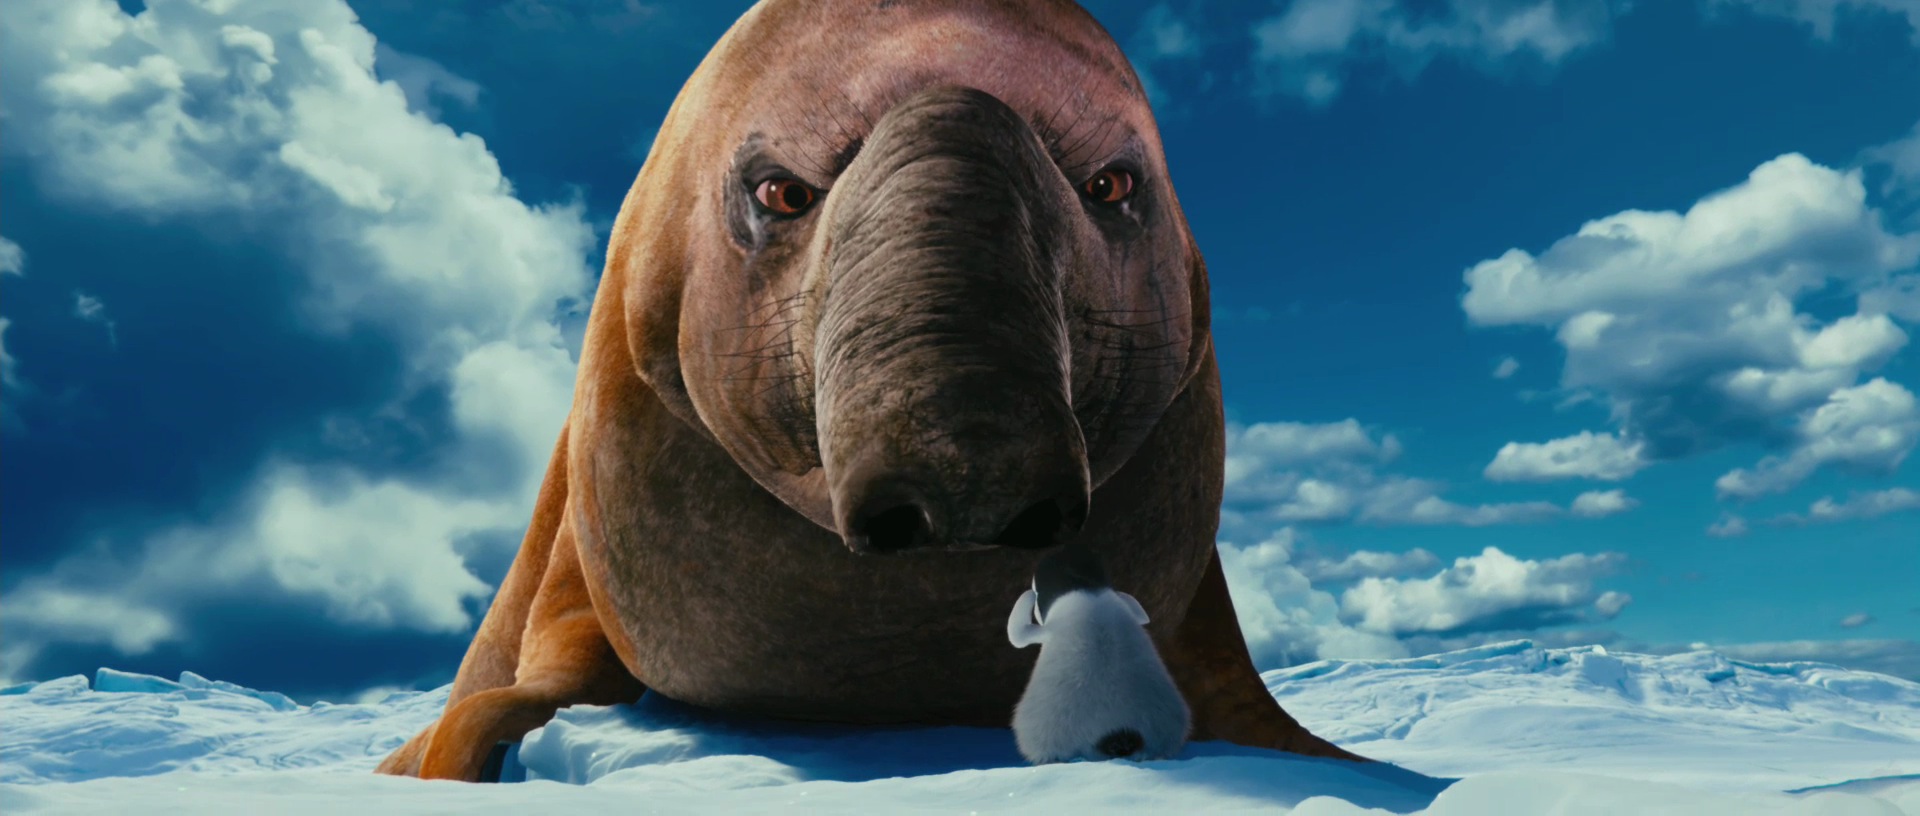 Elephant Seal And Erik From Happy Feet Two Desktop Wallpaper